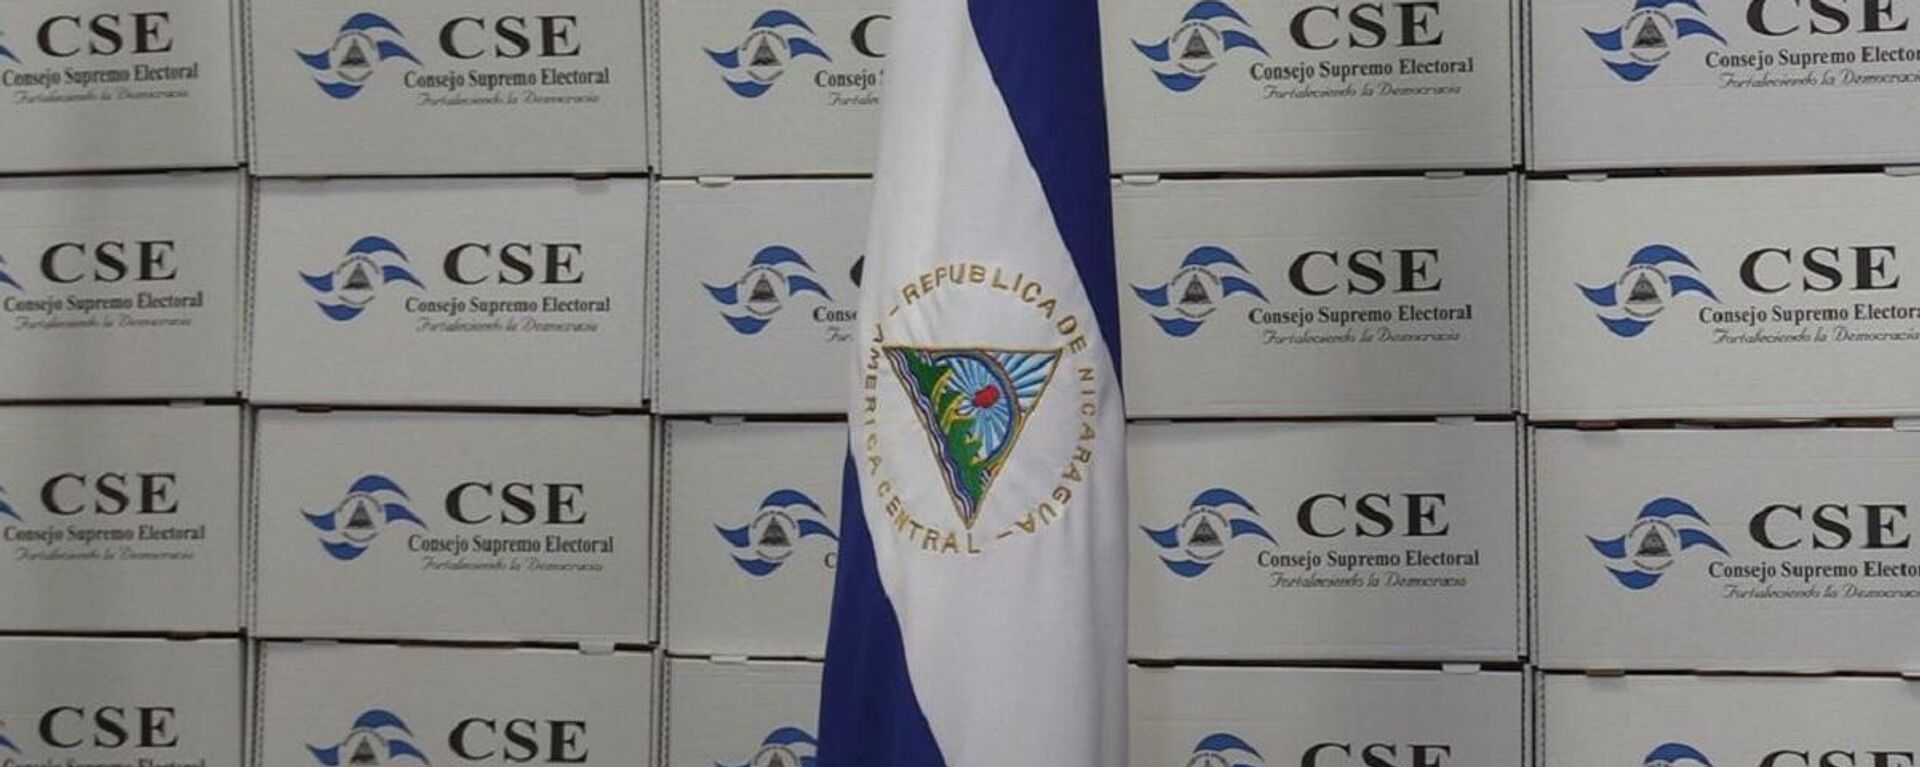 Maletas electorales en Nicaragua - Sputnik Mundo, 1920, 01.11.2021